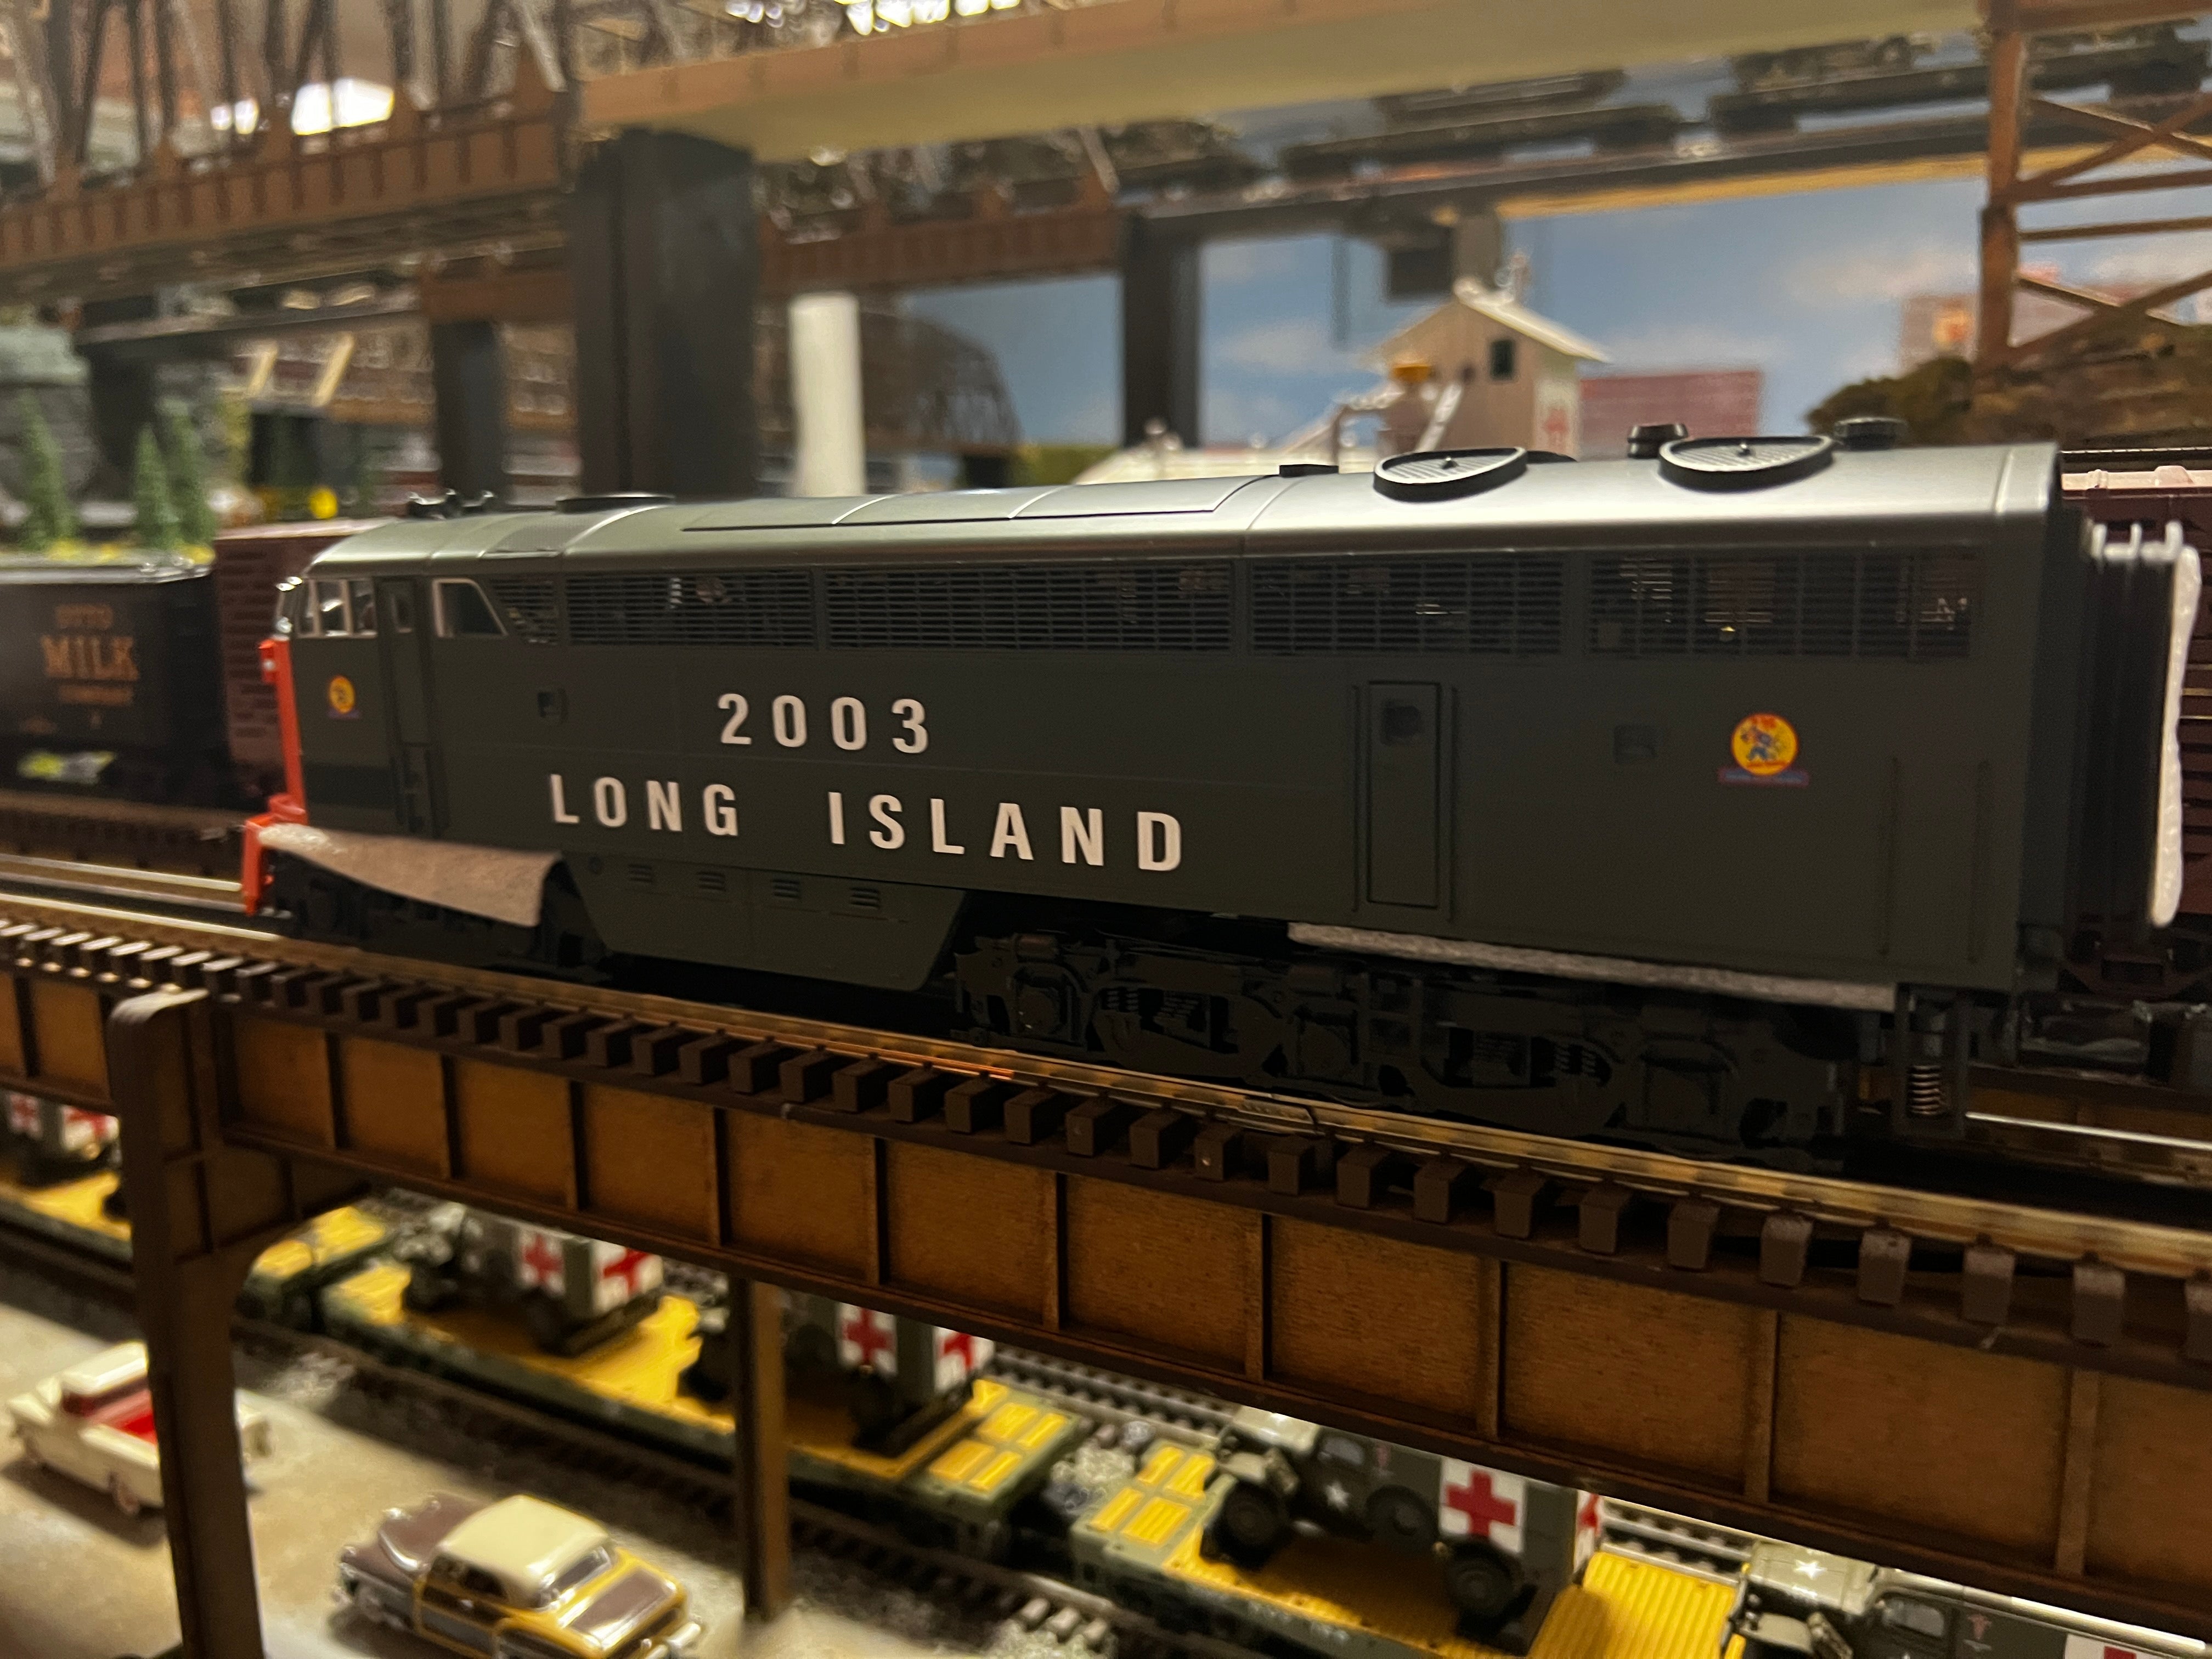 Lionel 2233282 - Legacy C Liner Diesel Locomotive "Long Island" #2003